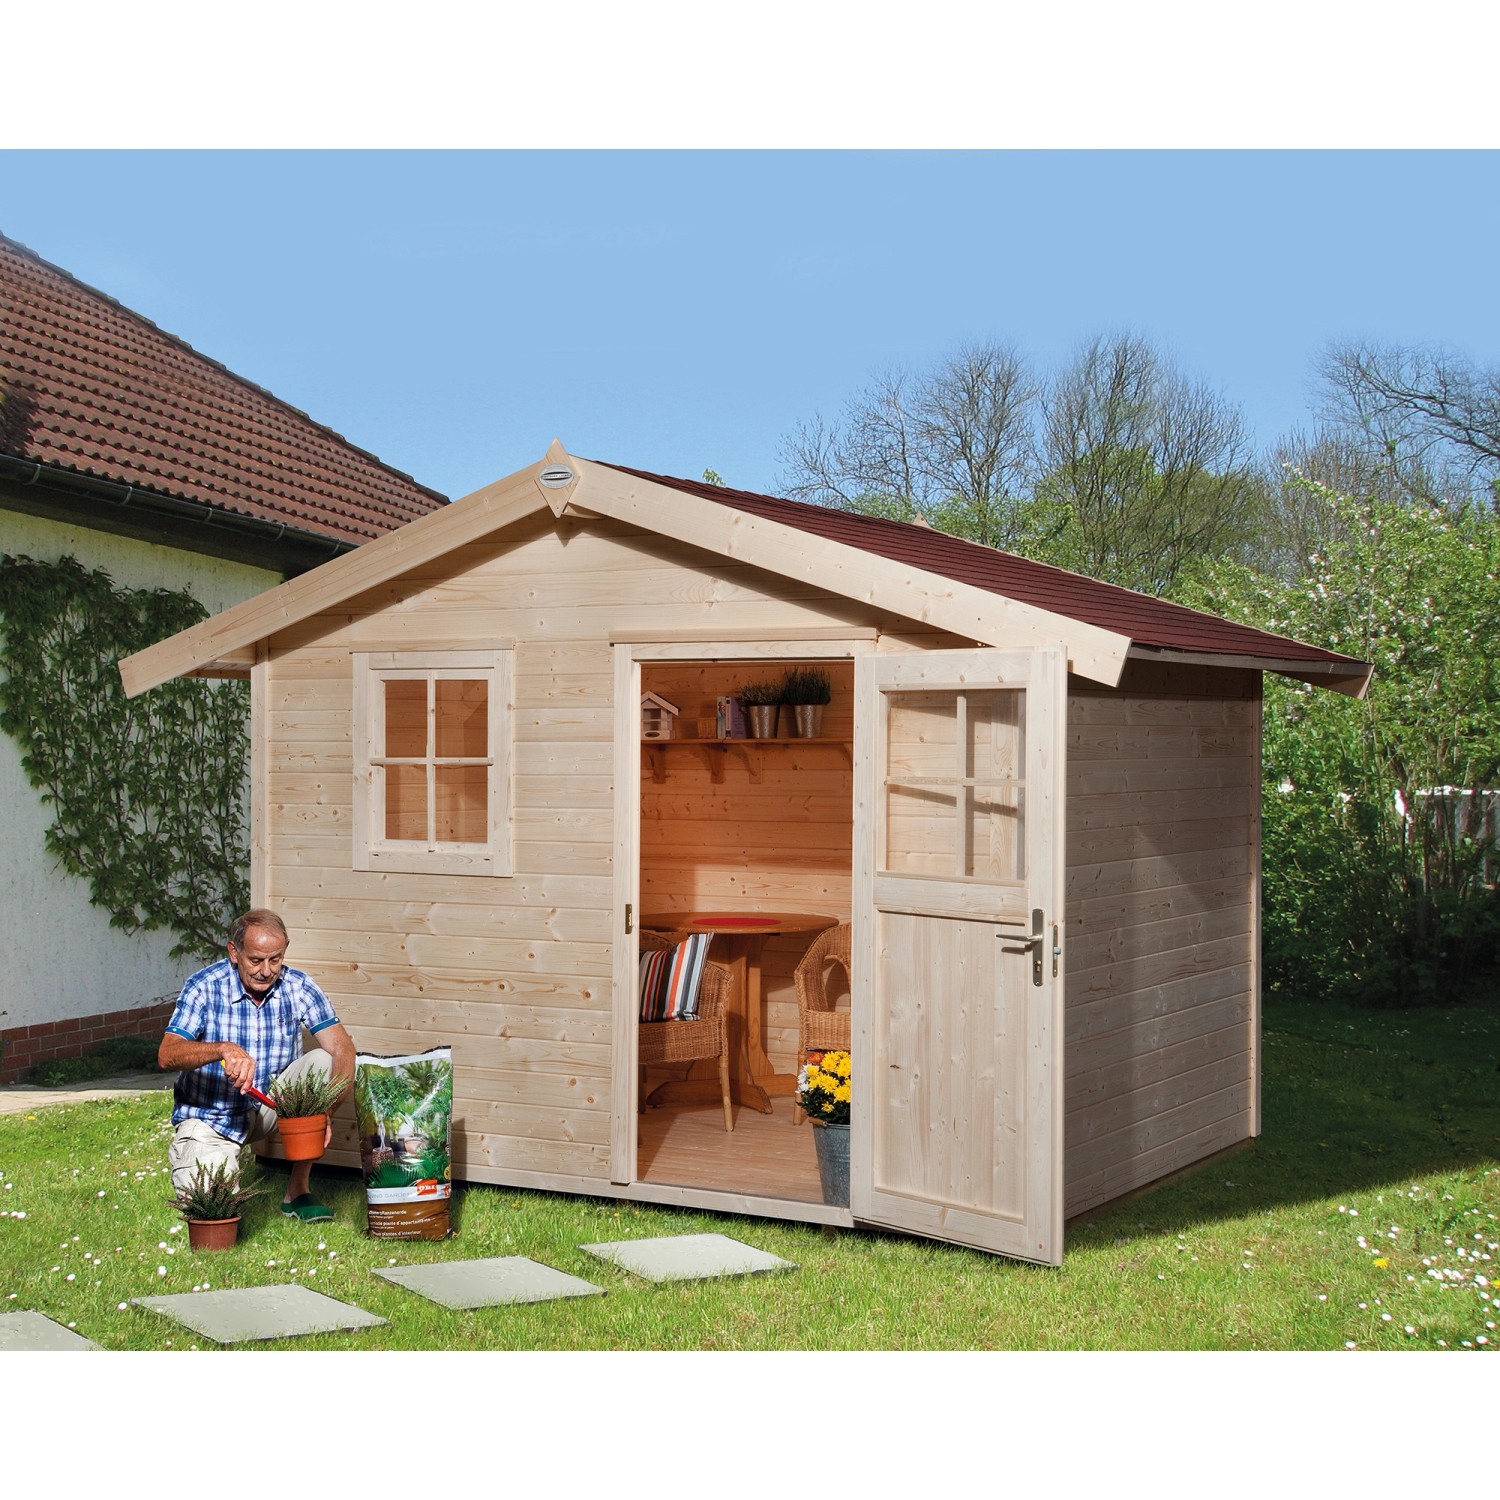 OBI Outdoor Living Holz-Gartenhaus Bozen Satteldach Unbehandelt 240 cm x 235 cm von OBI Outdoor Living